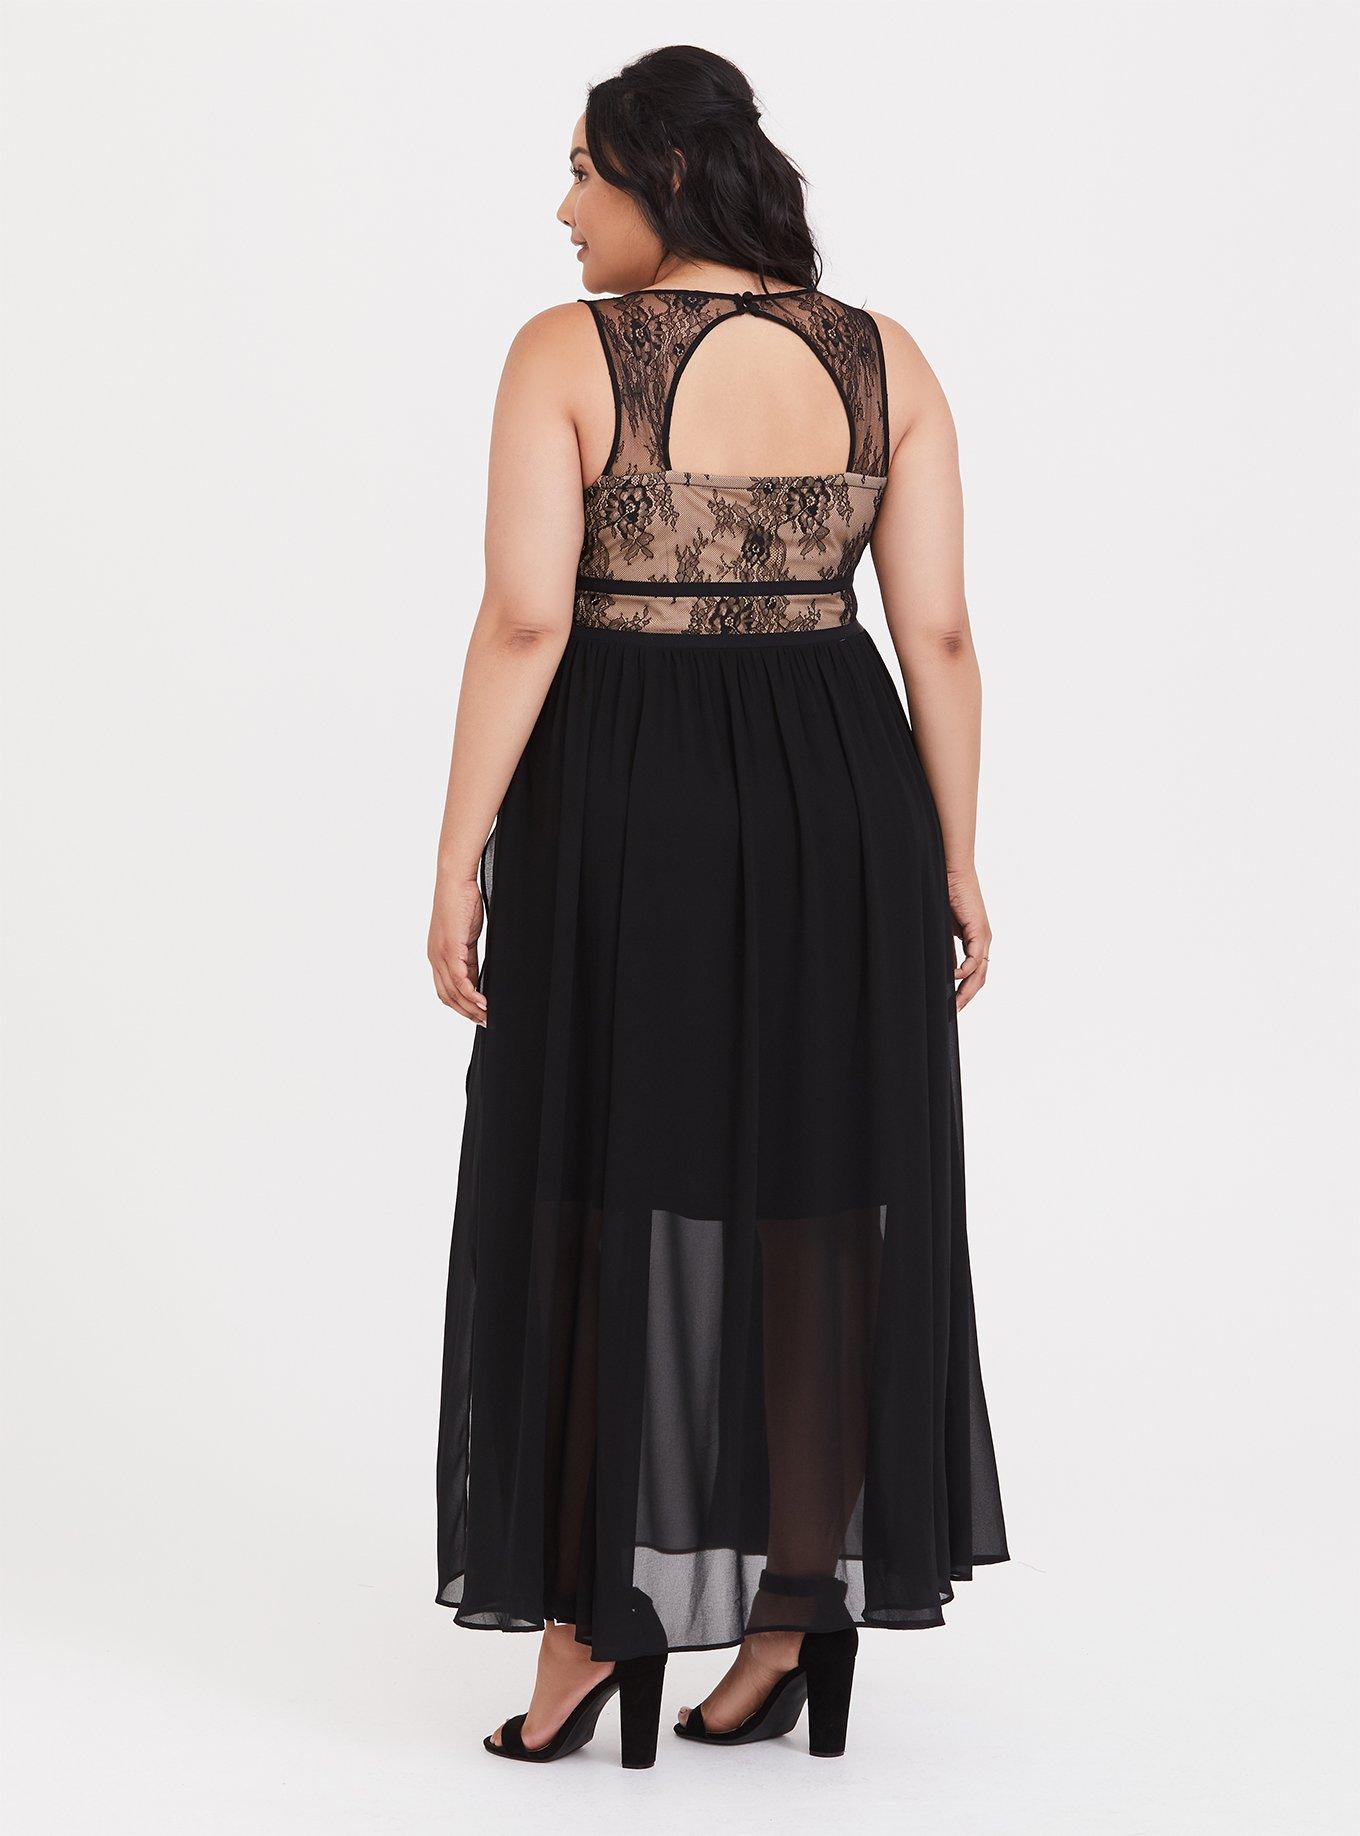 Plus Size - Black Lace & Chiffon Maxi Dress - Torrid